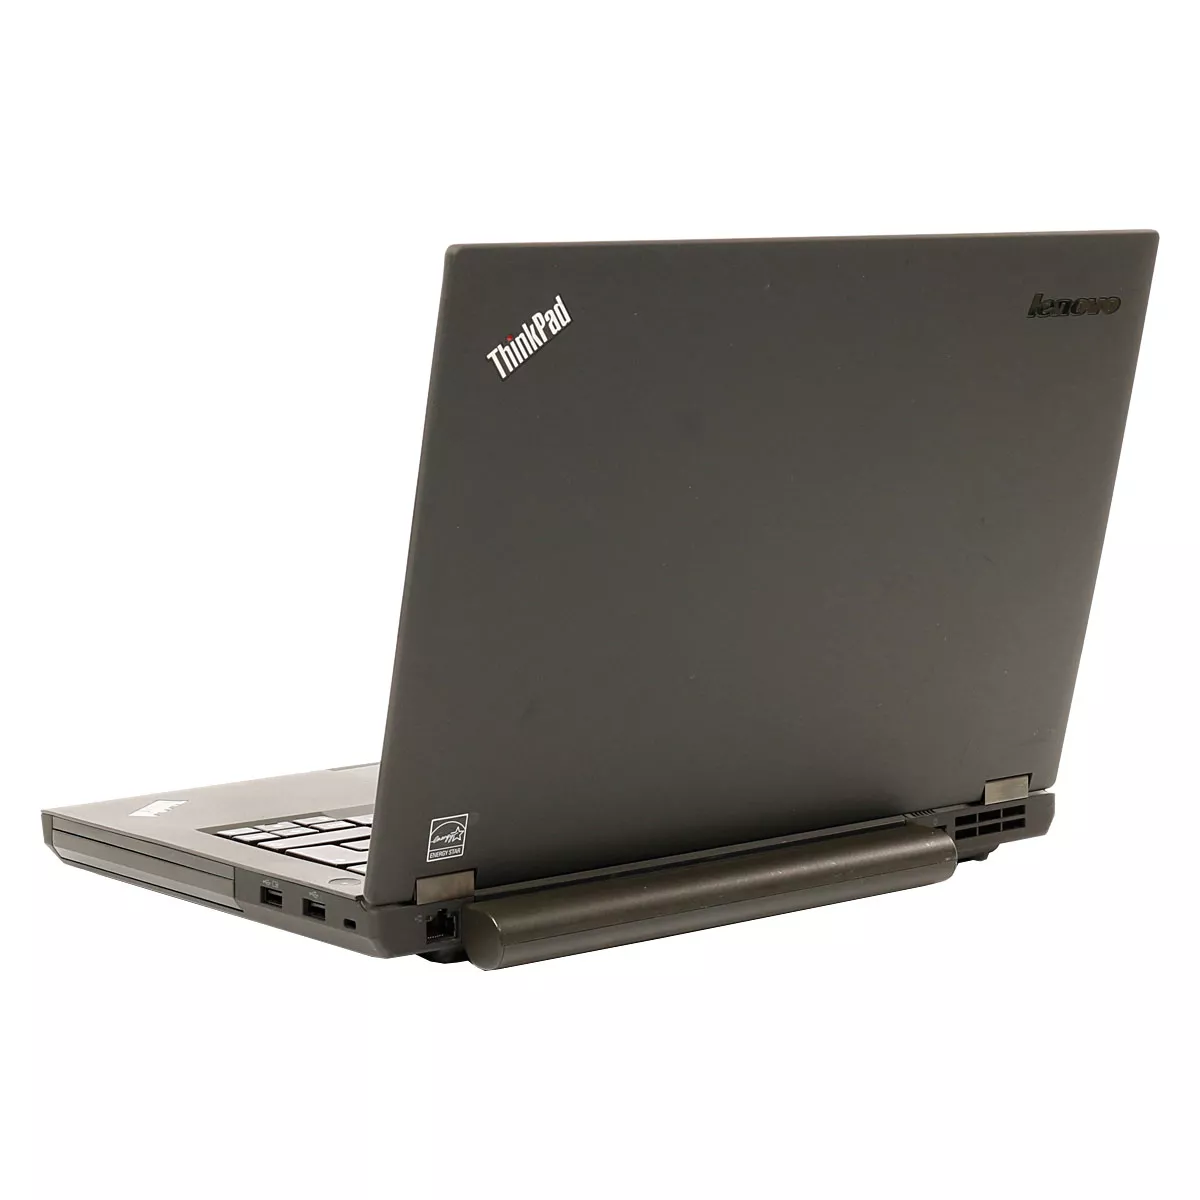 Lenovo ThinkPad T440p Core i5 4300M 2,6 GHz 240 GB SSD Webcam